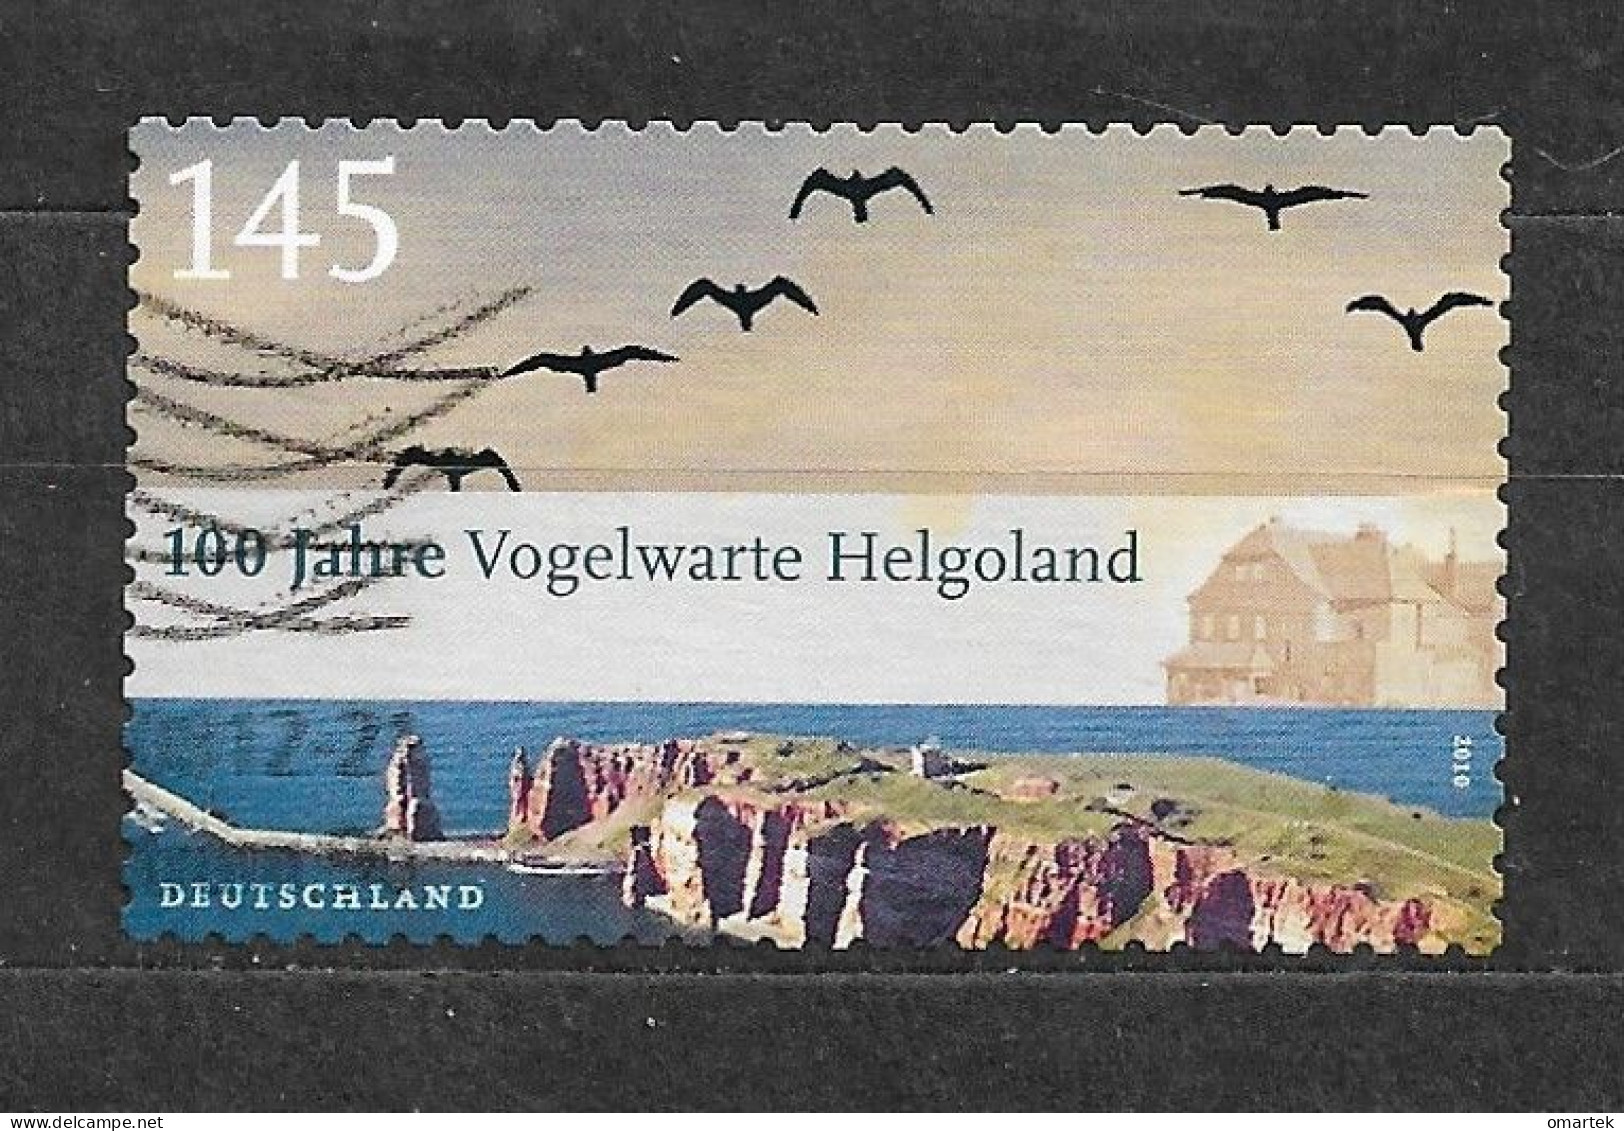 Deutschland Germany BRD 2010 ⊙ Mi 2793 Helgoland Ornithological Institute. C2 - Used Stamps